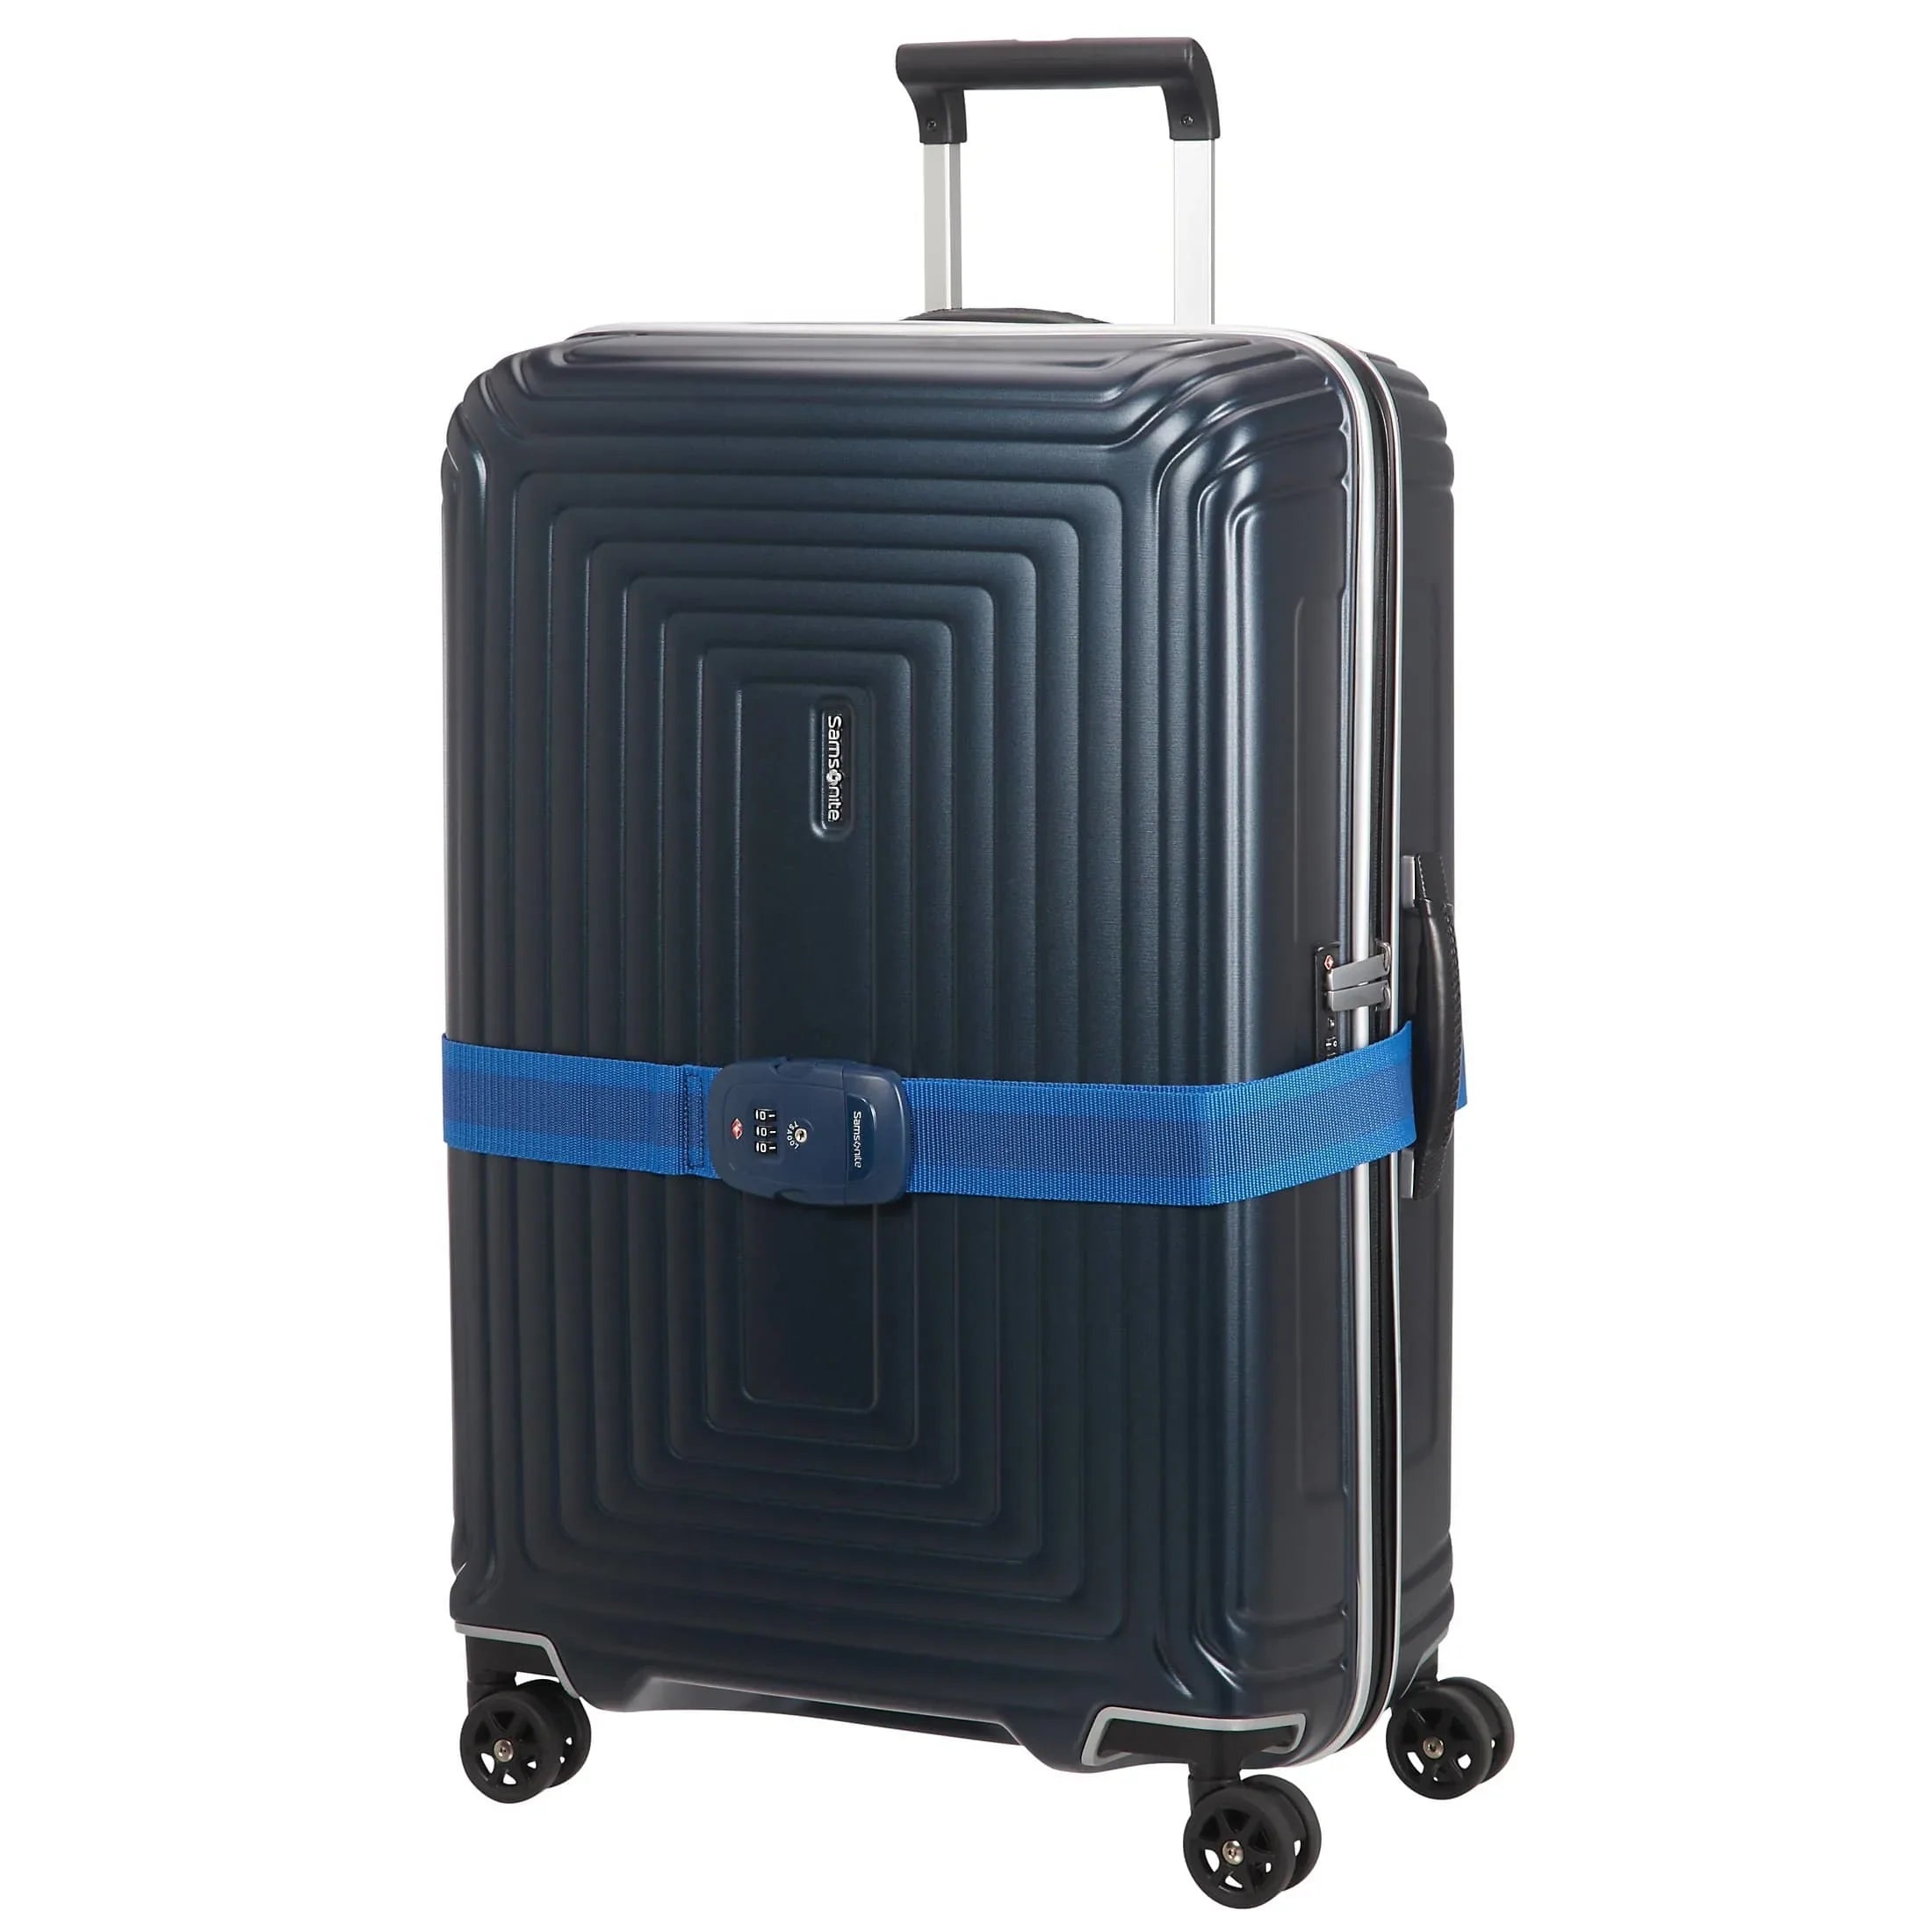 Samsonite Travel Accessories sangle de bagage TSA - bleu nuit